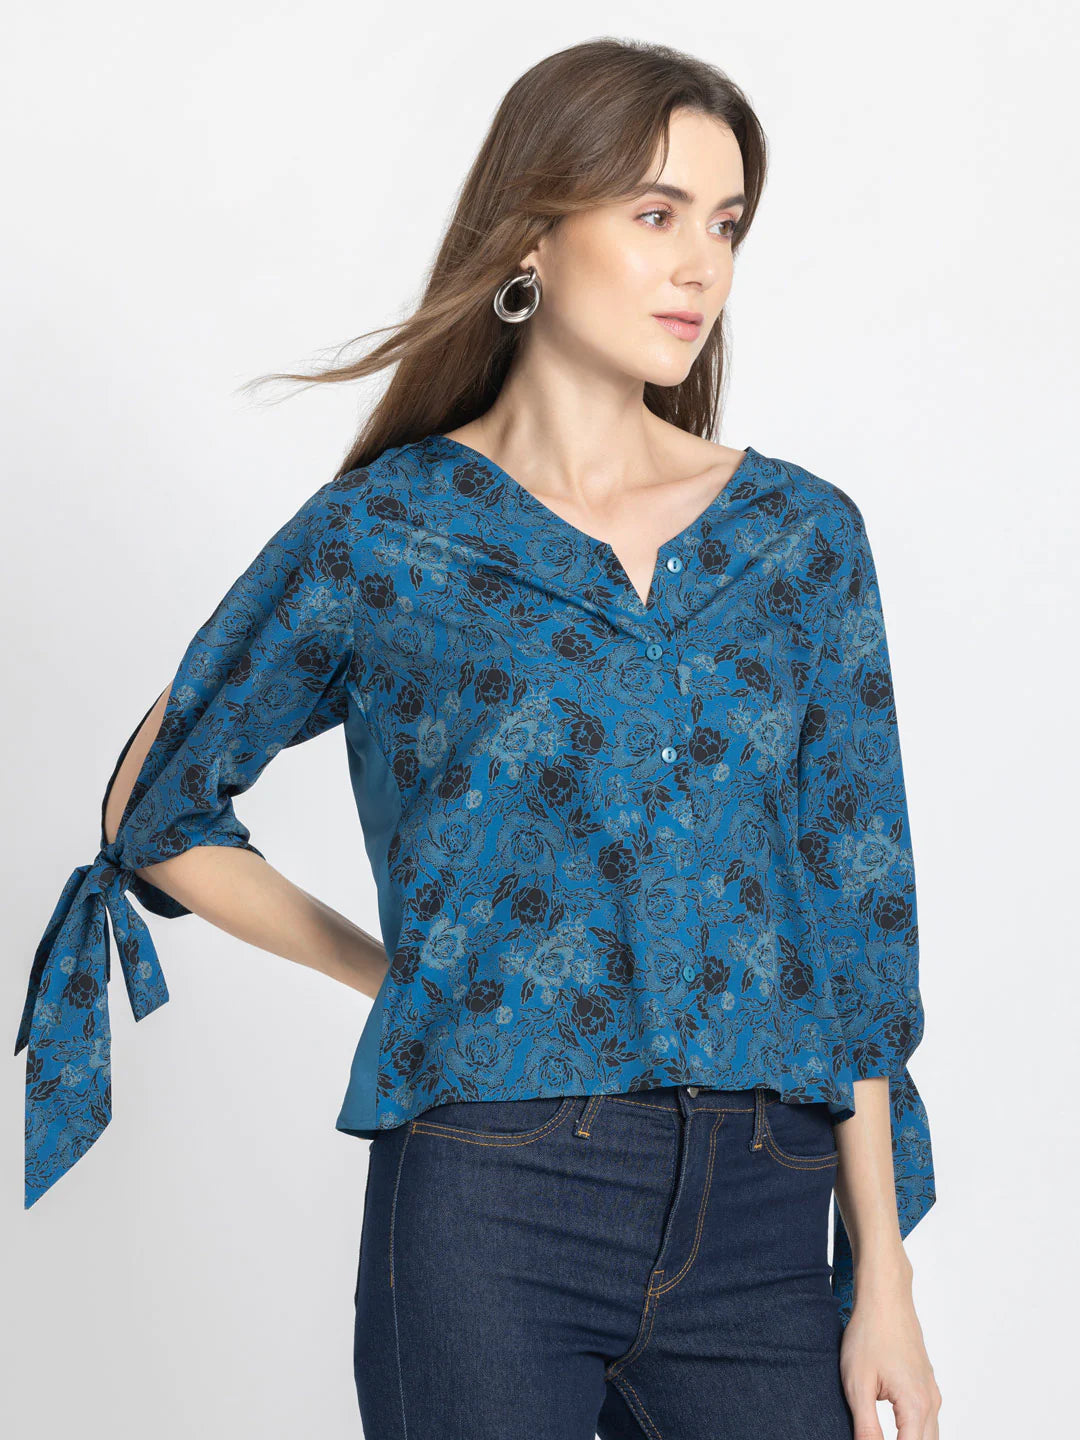 Blue Floral Print Shirt for Women | Enchanting Blooms Floral Print Shirt